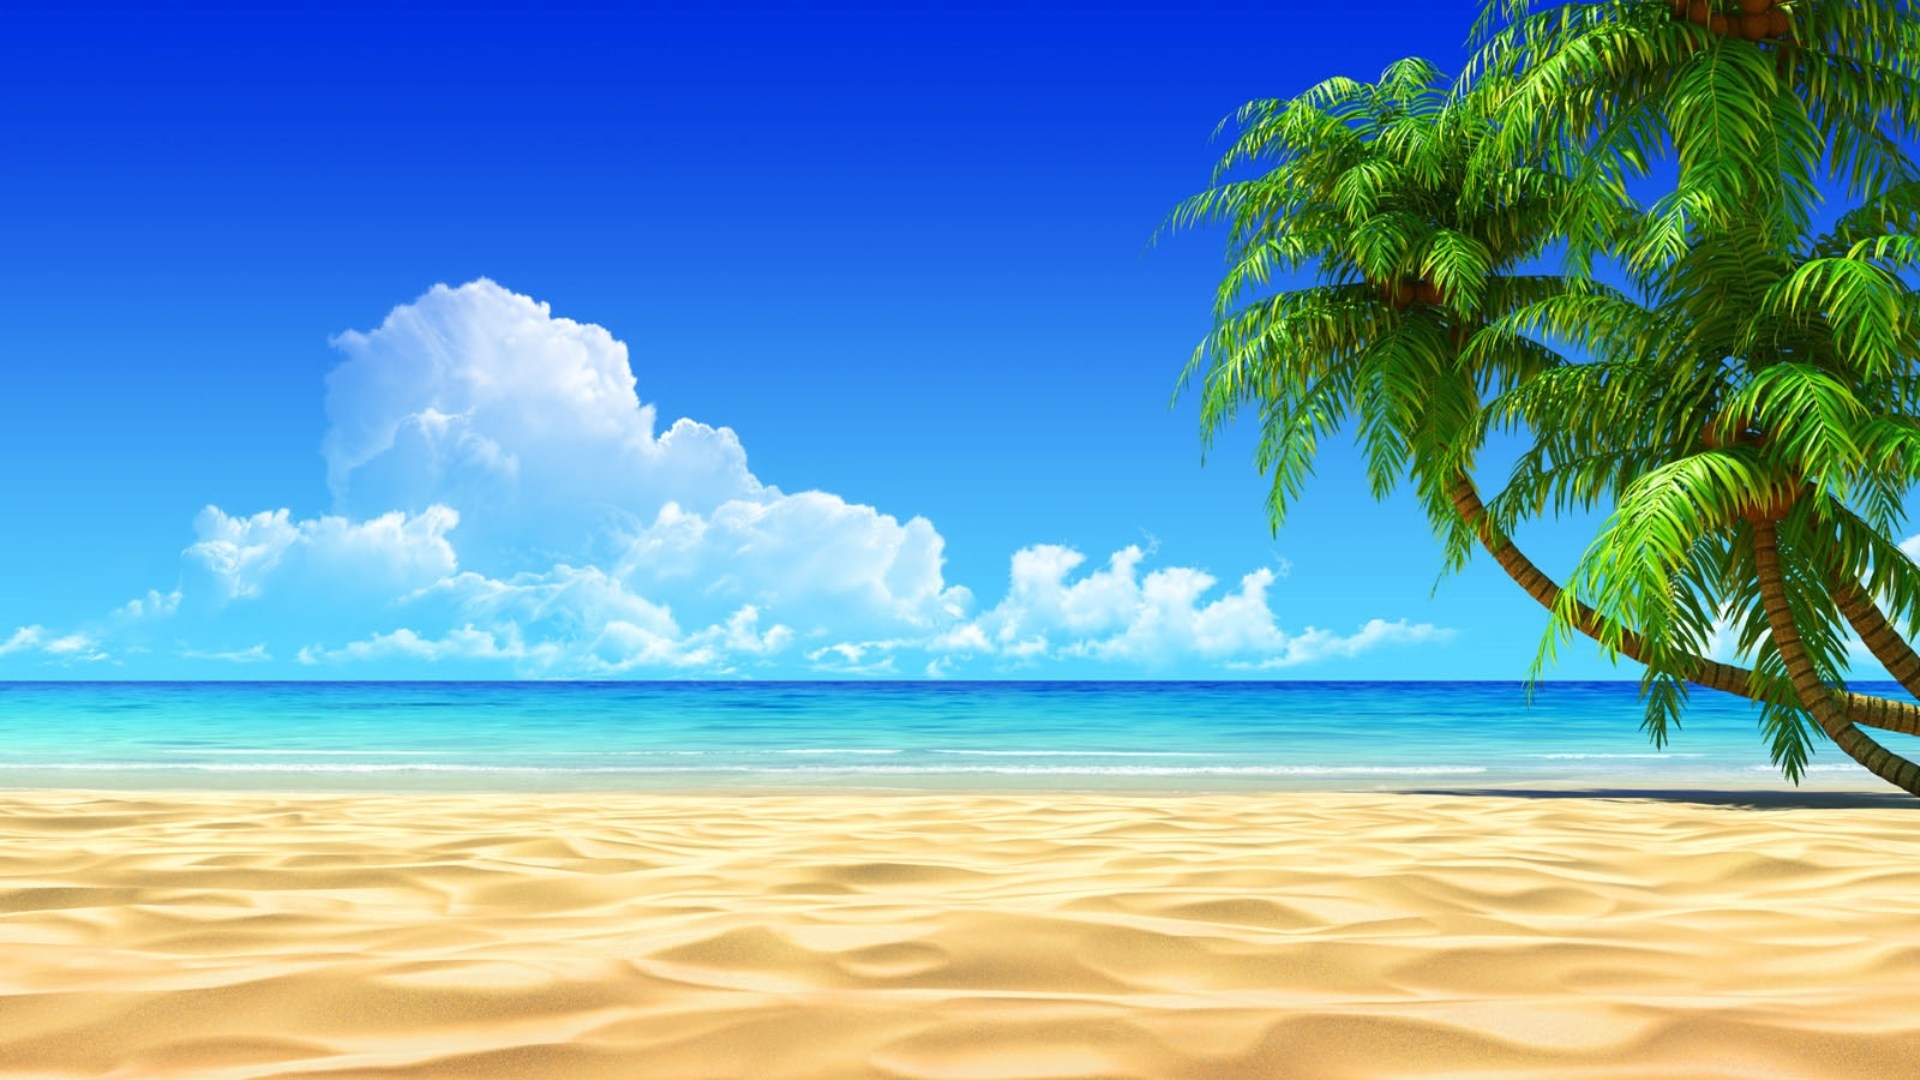 10 New Free Beach Desktop Wallpaper Full Hd 1080p For Pc Background 2020